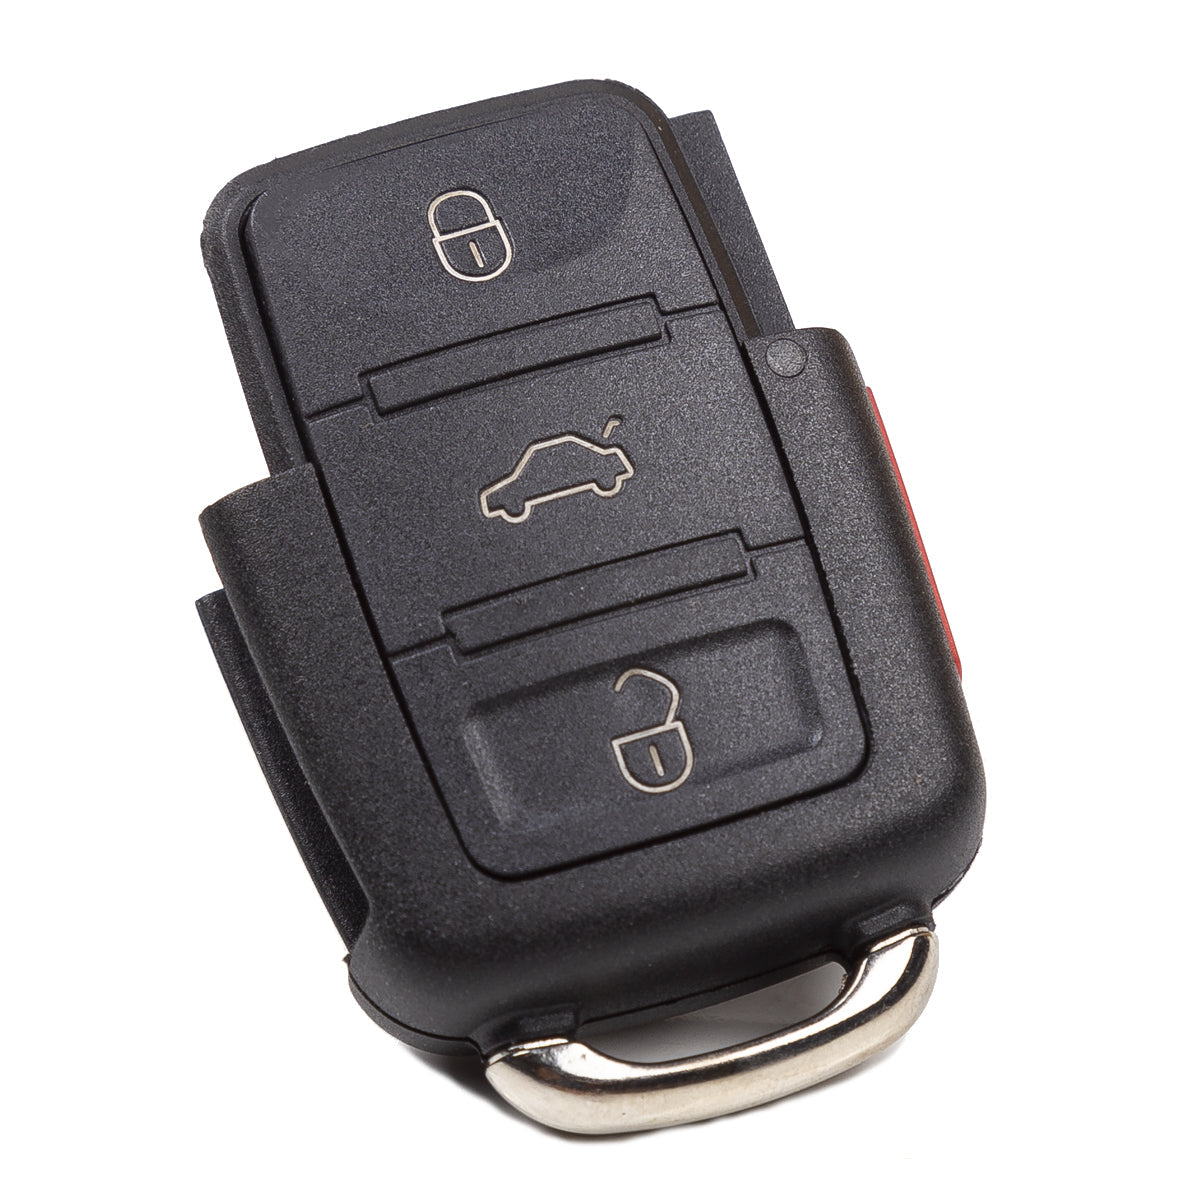 Flip Key Fob-Remote Part Compatible with Volkswagen 1999 - 2012 4B Part# 1J0 959 753DC / AM